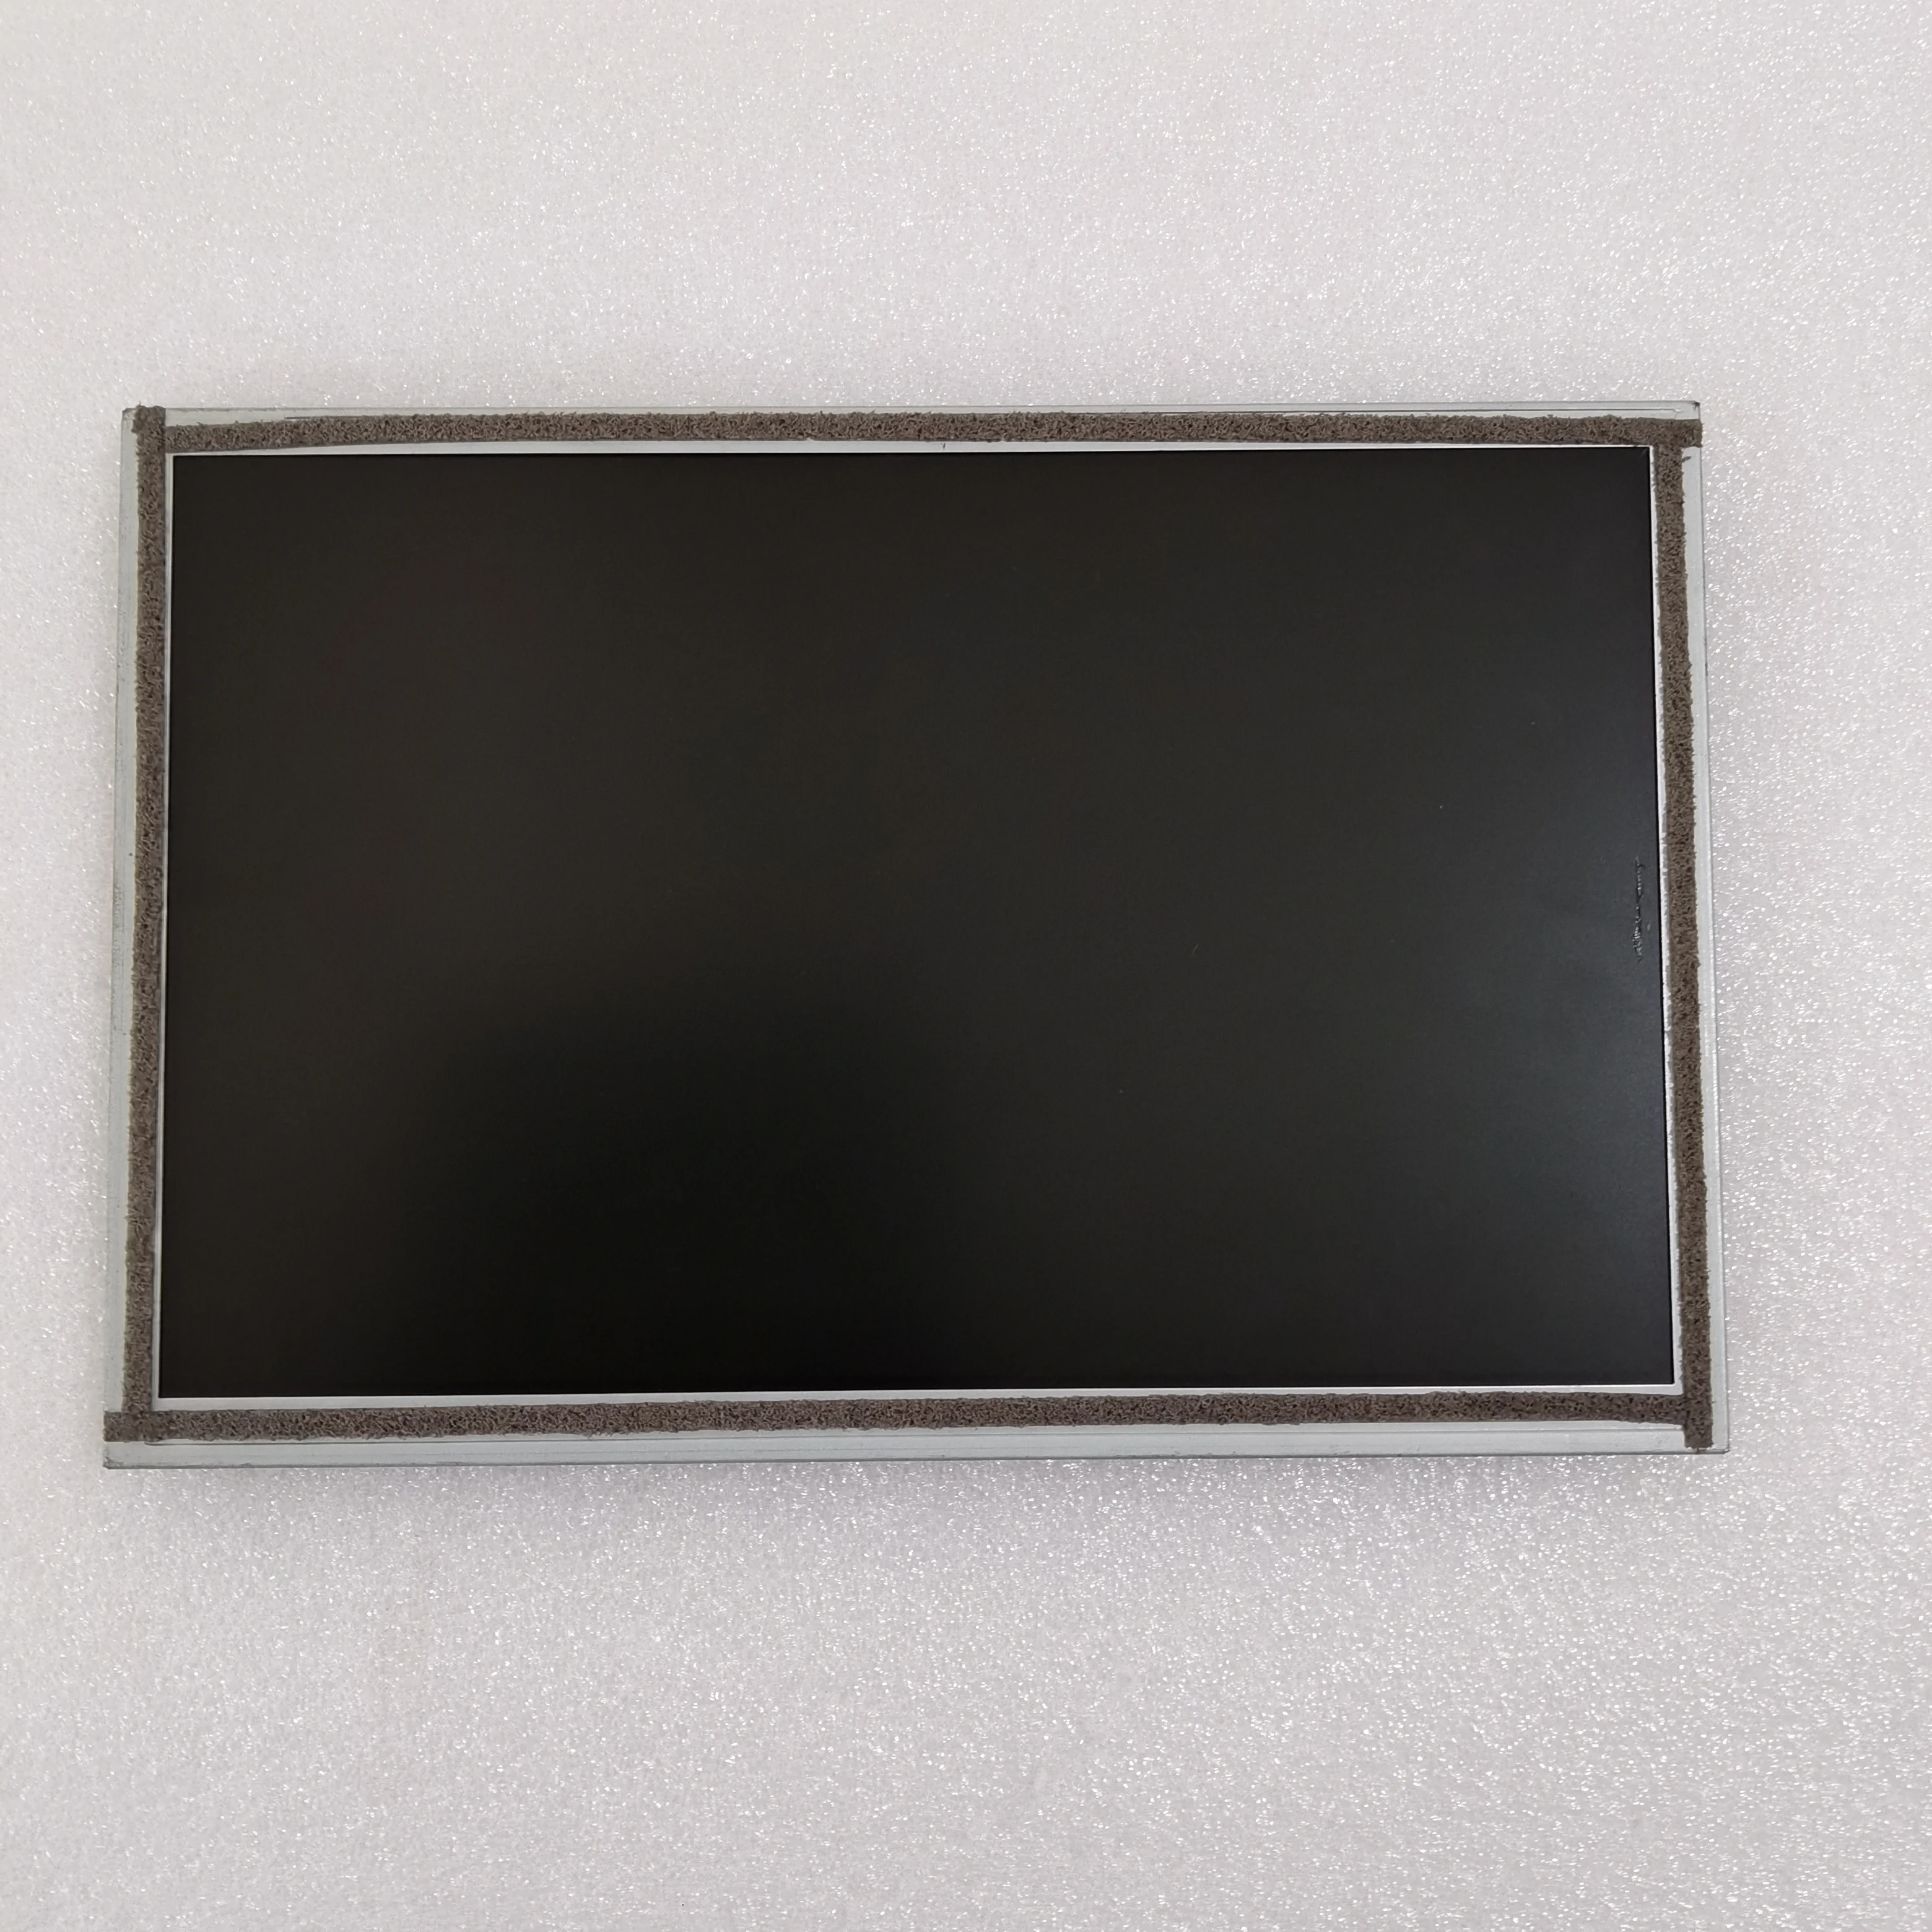 

TCG101WXLP-ANN-AN-01 LCD display screen